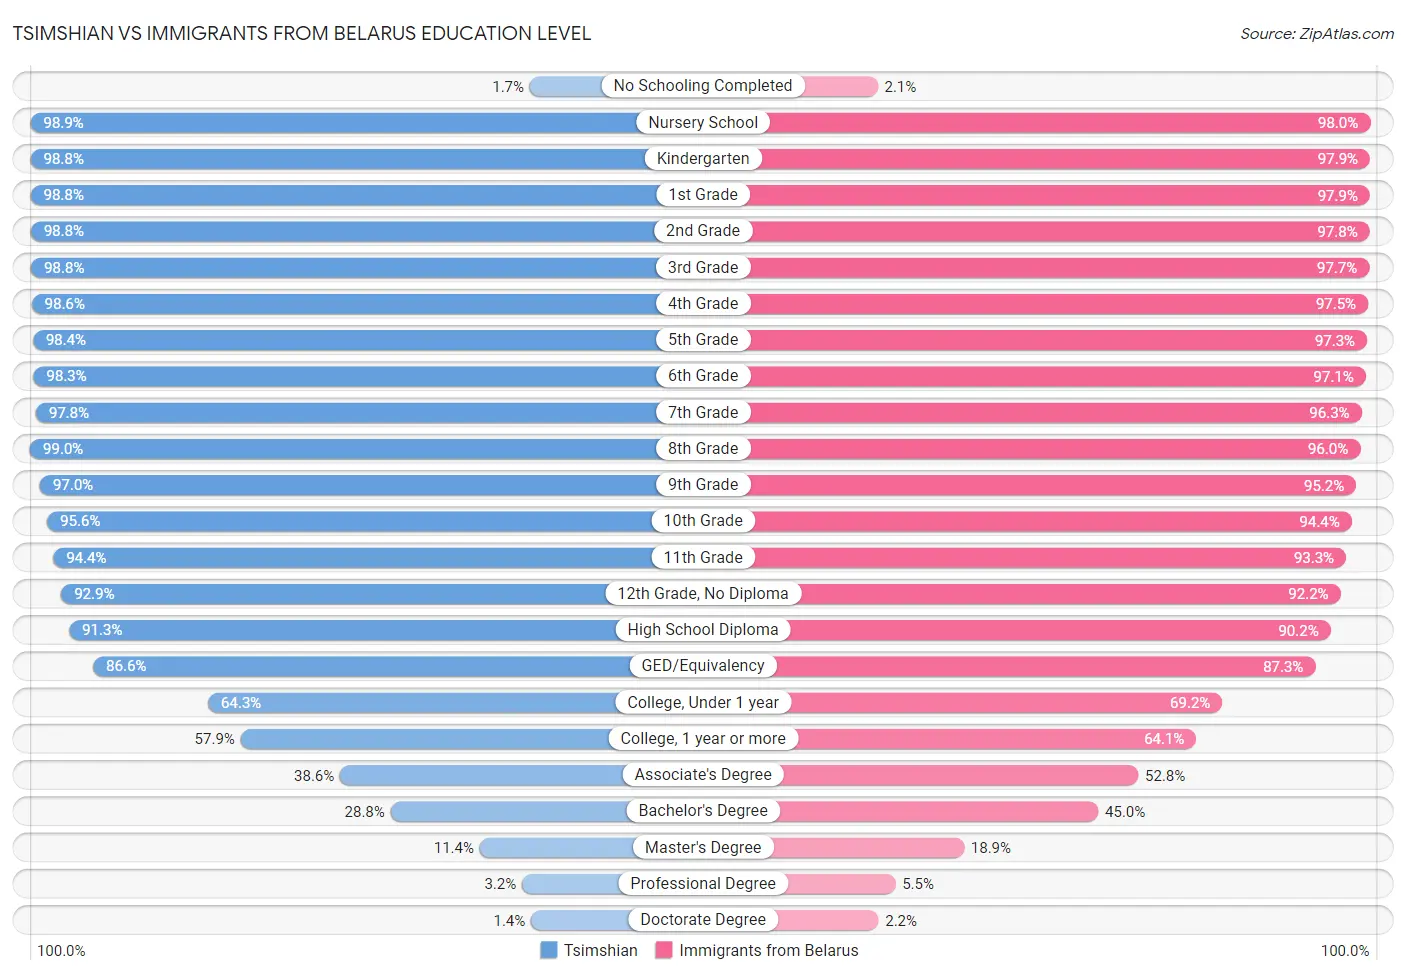 Tsimshian vs Immigrants from Belarus Education Level